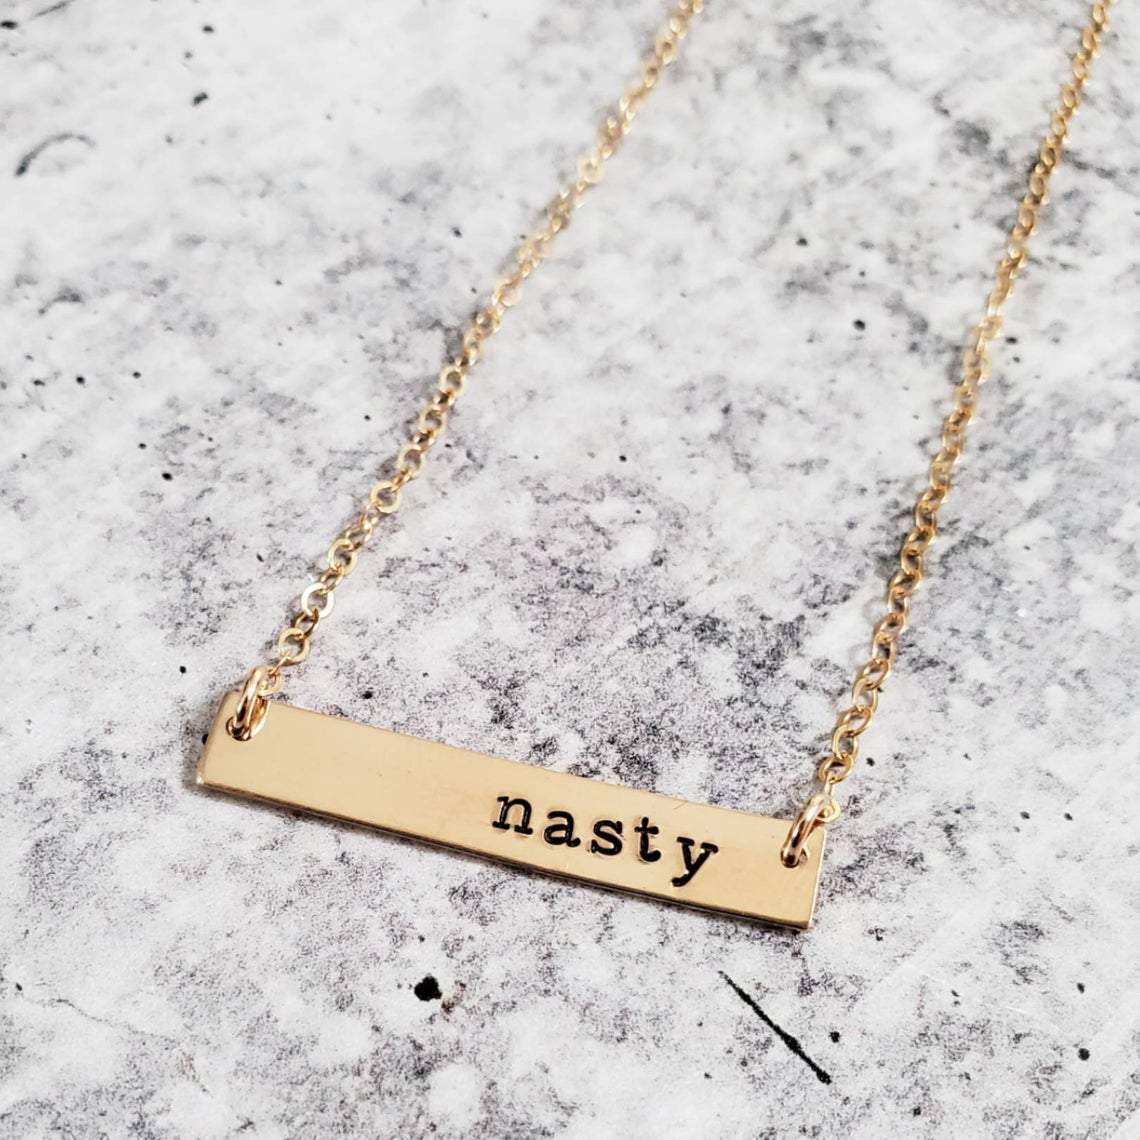 NASTY Feminist Bar Necklace Salt and Sparkle